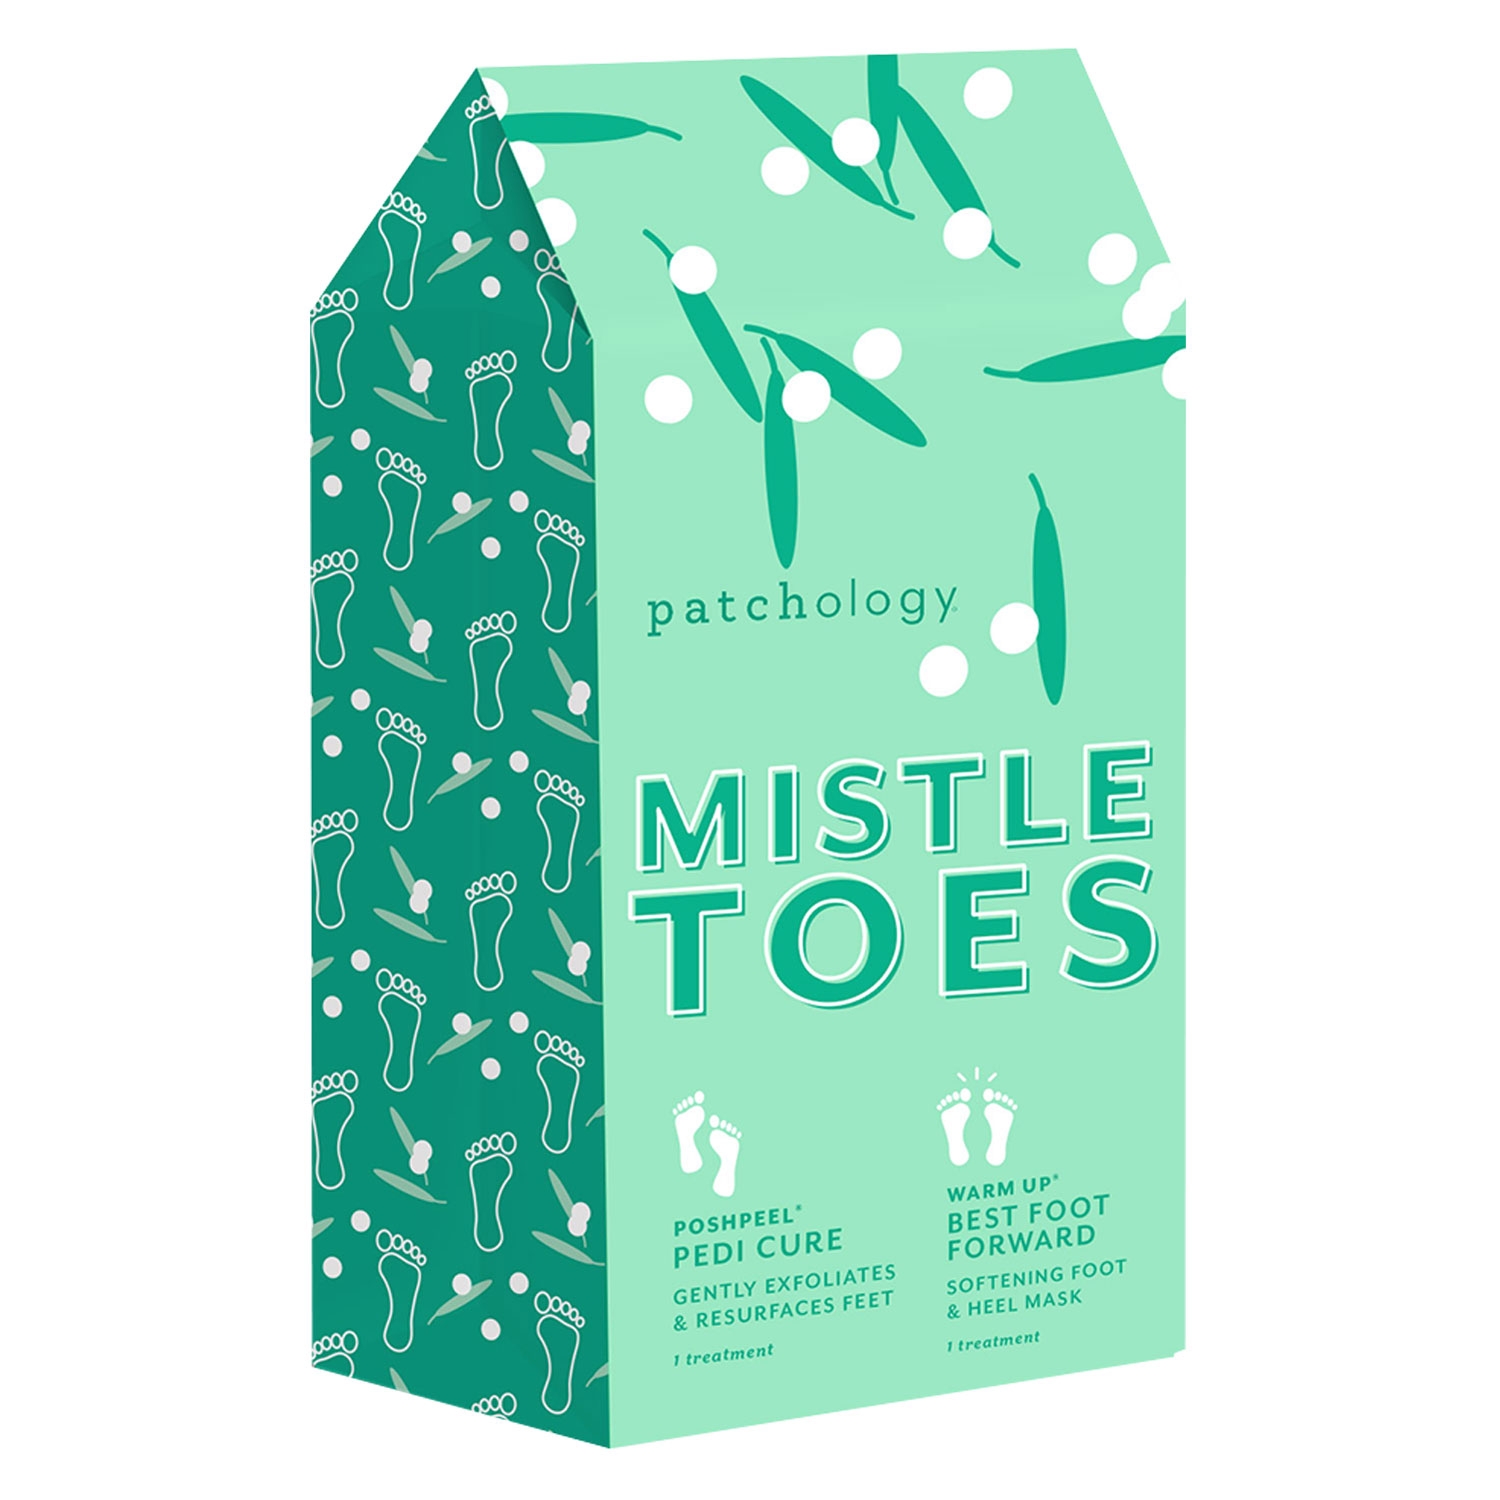 Produktbild von patchology Kits - Mistle Toes Kit